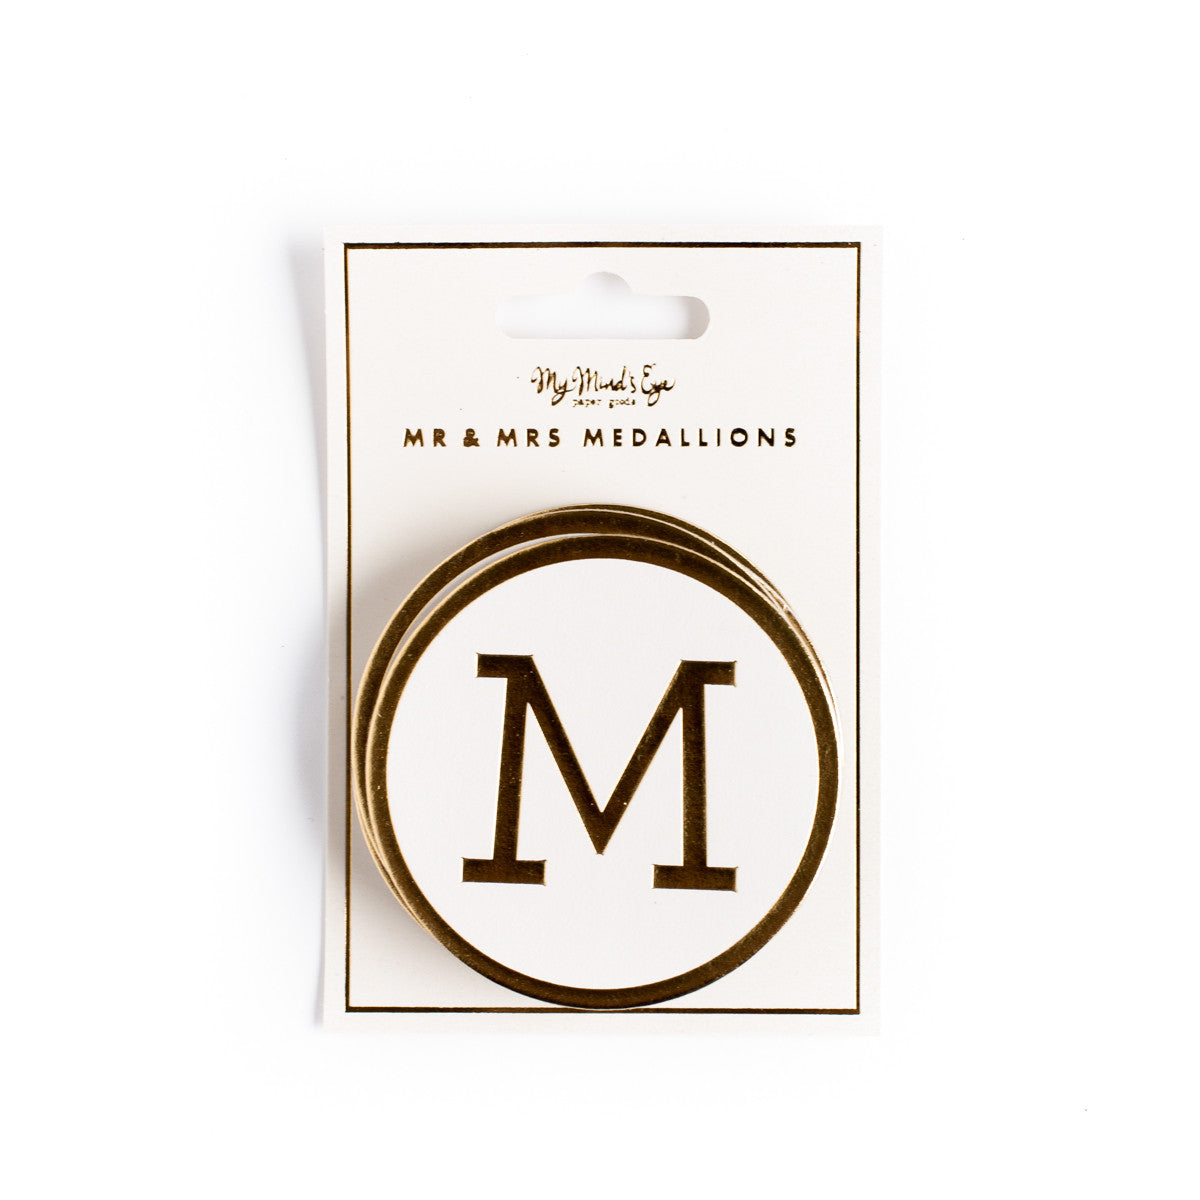 Fancy MR & MRS Medallions - My Mind's Eye Paper Goods